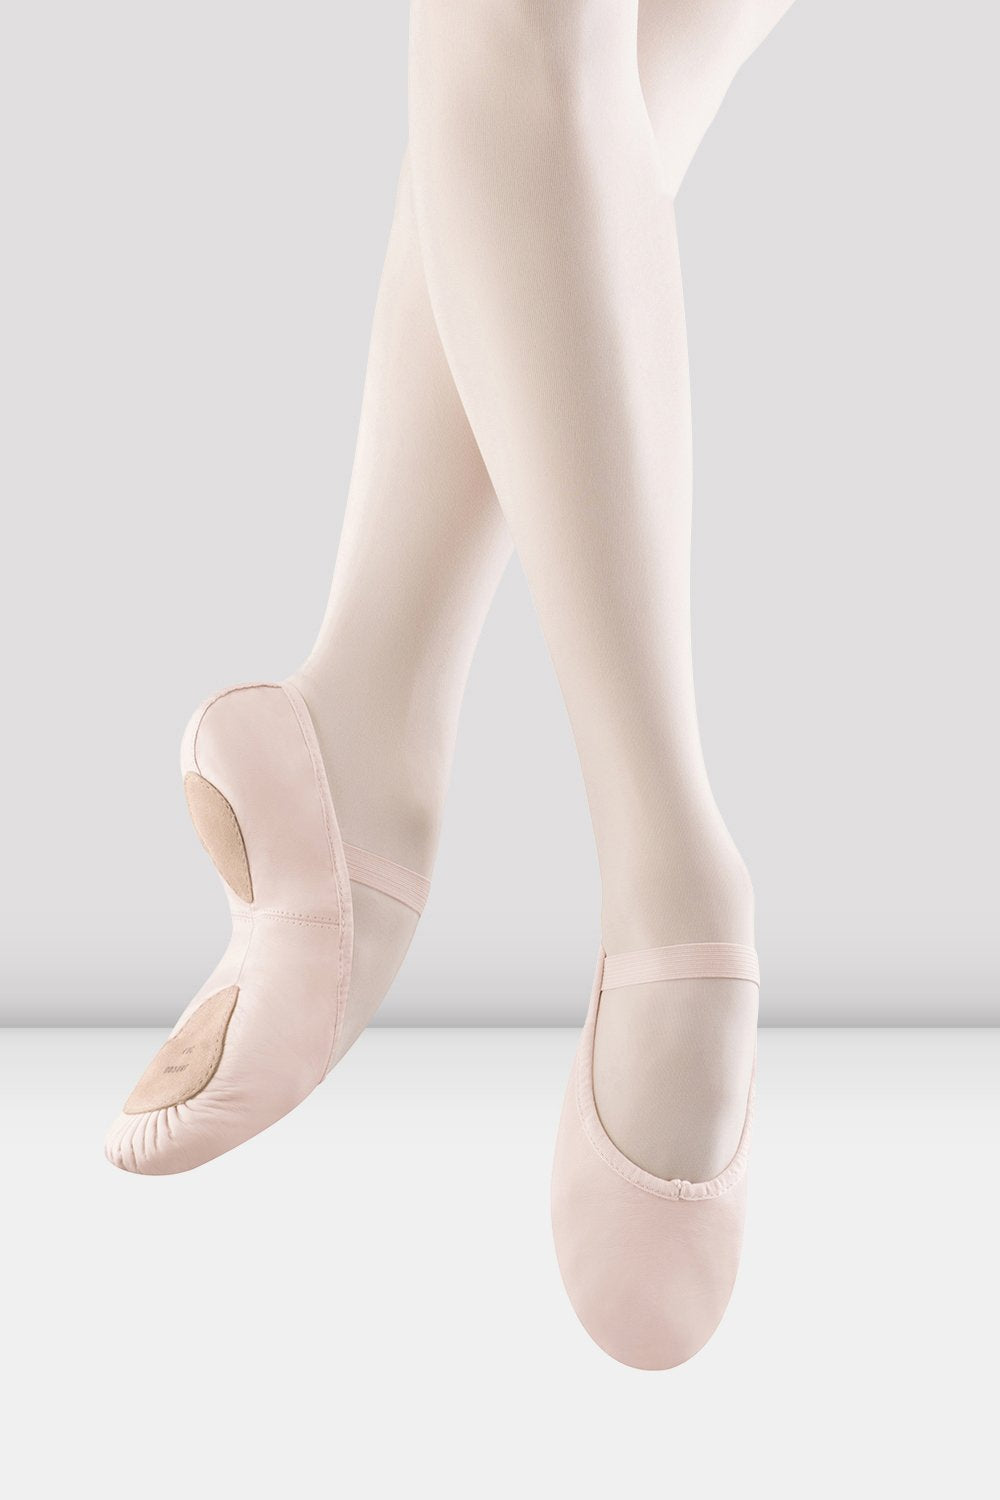 Bloch Childrens Dansoft II Split-Sole Leather Ballet Slipper SO258G (Special Order Only)